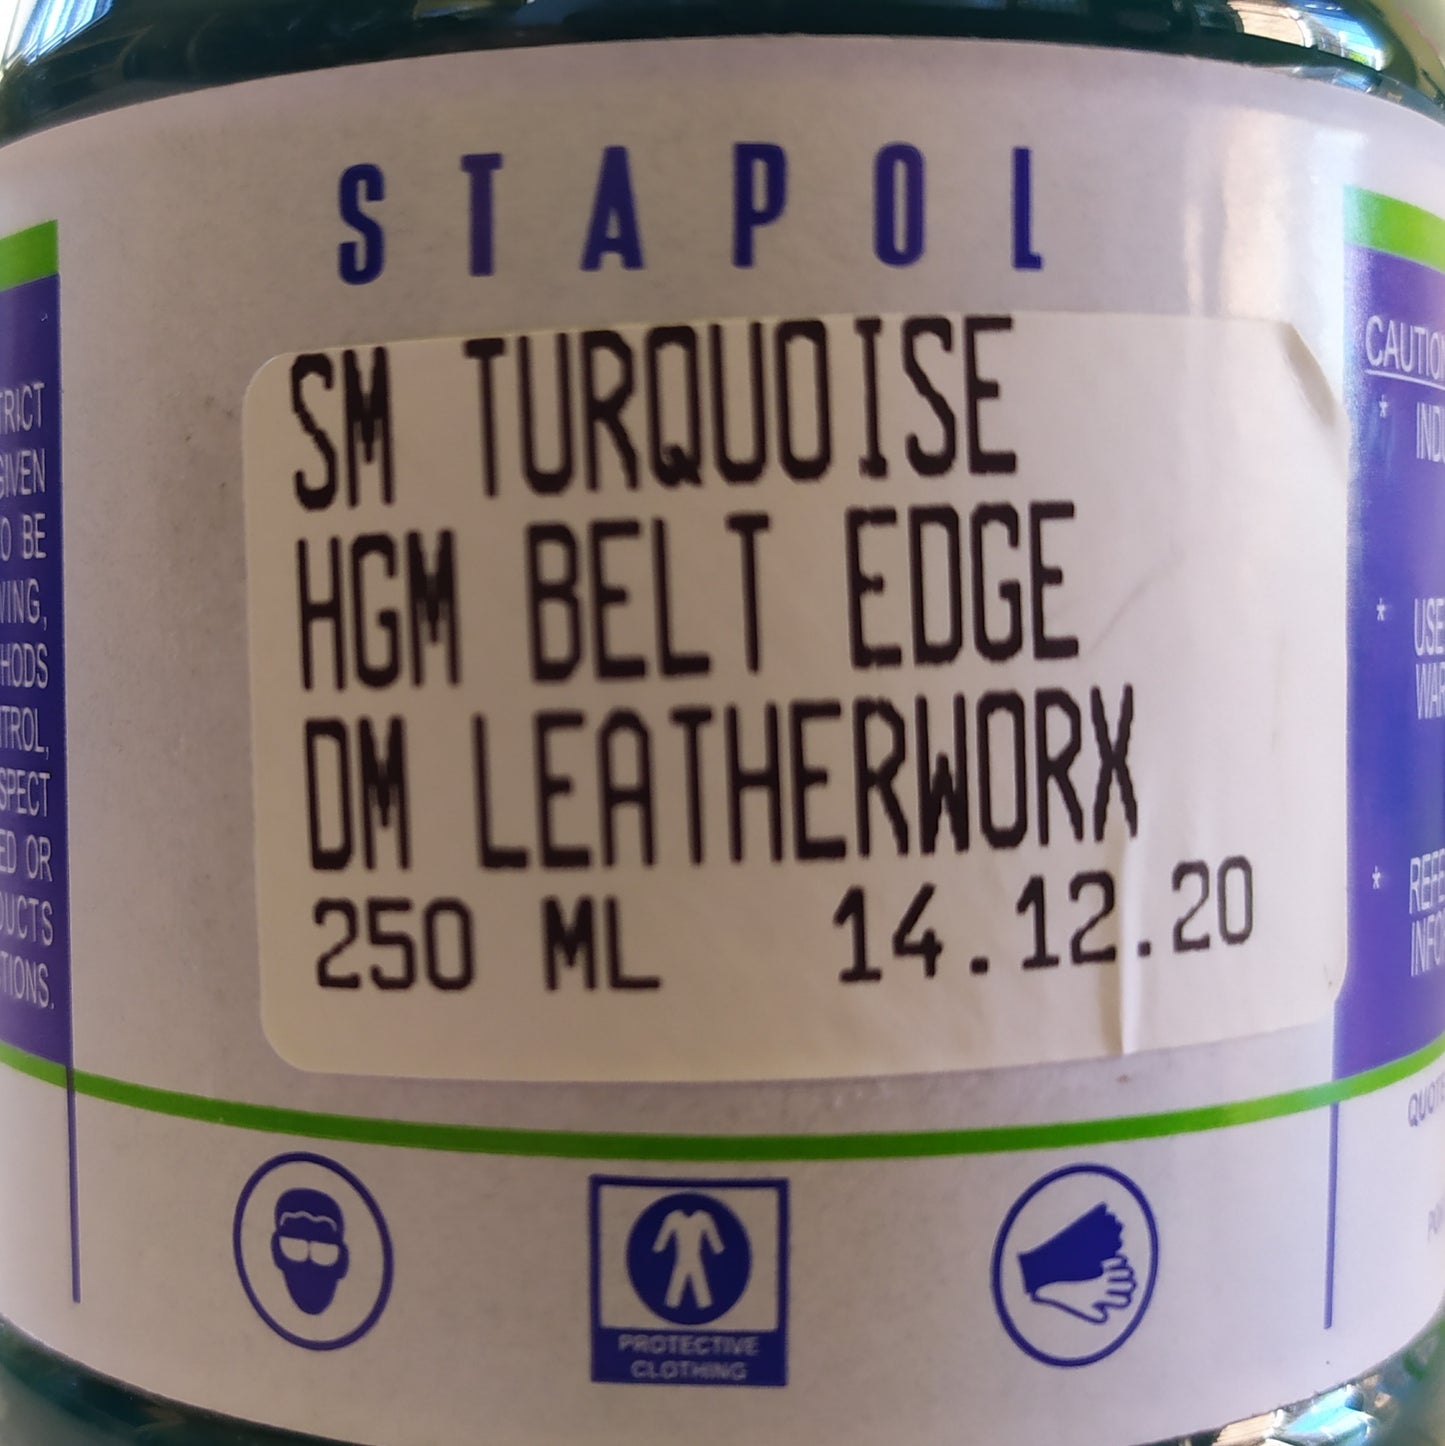 Belt Edge - Turquoise (High Gloss) - 250ml